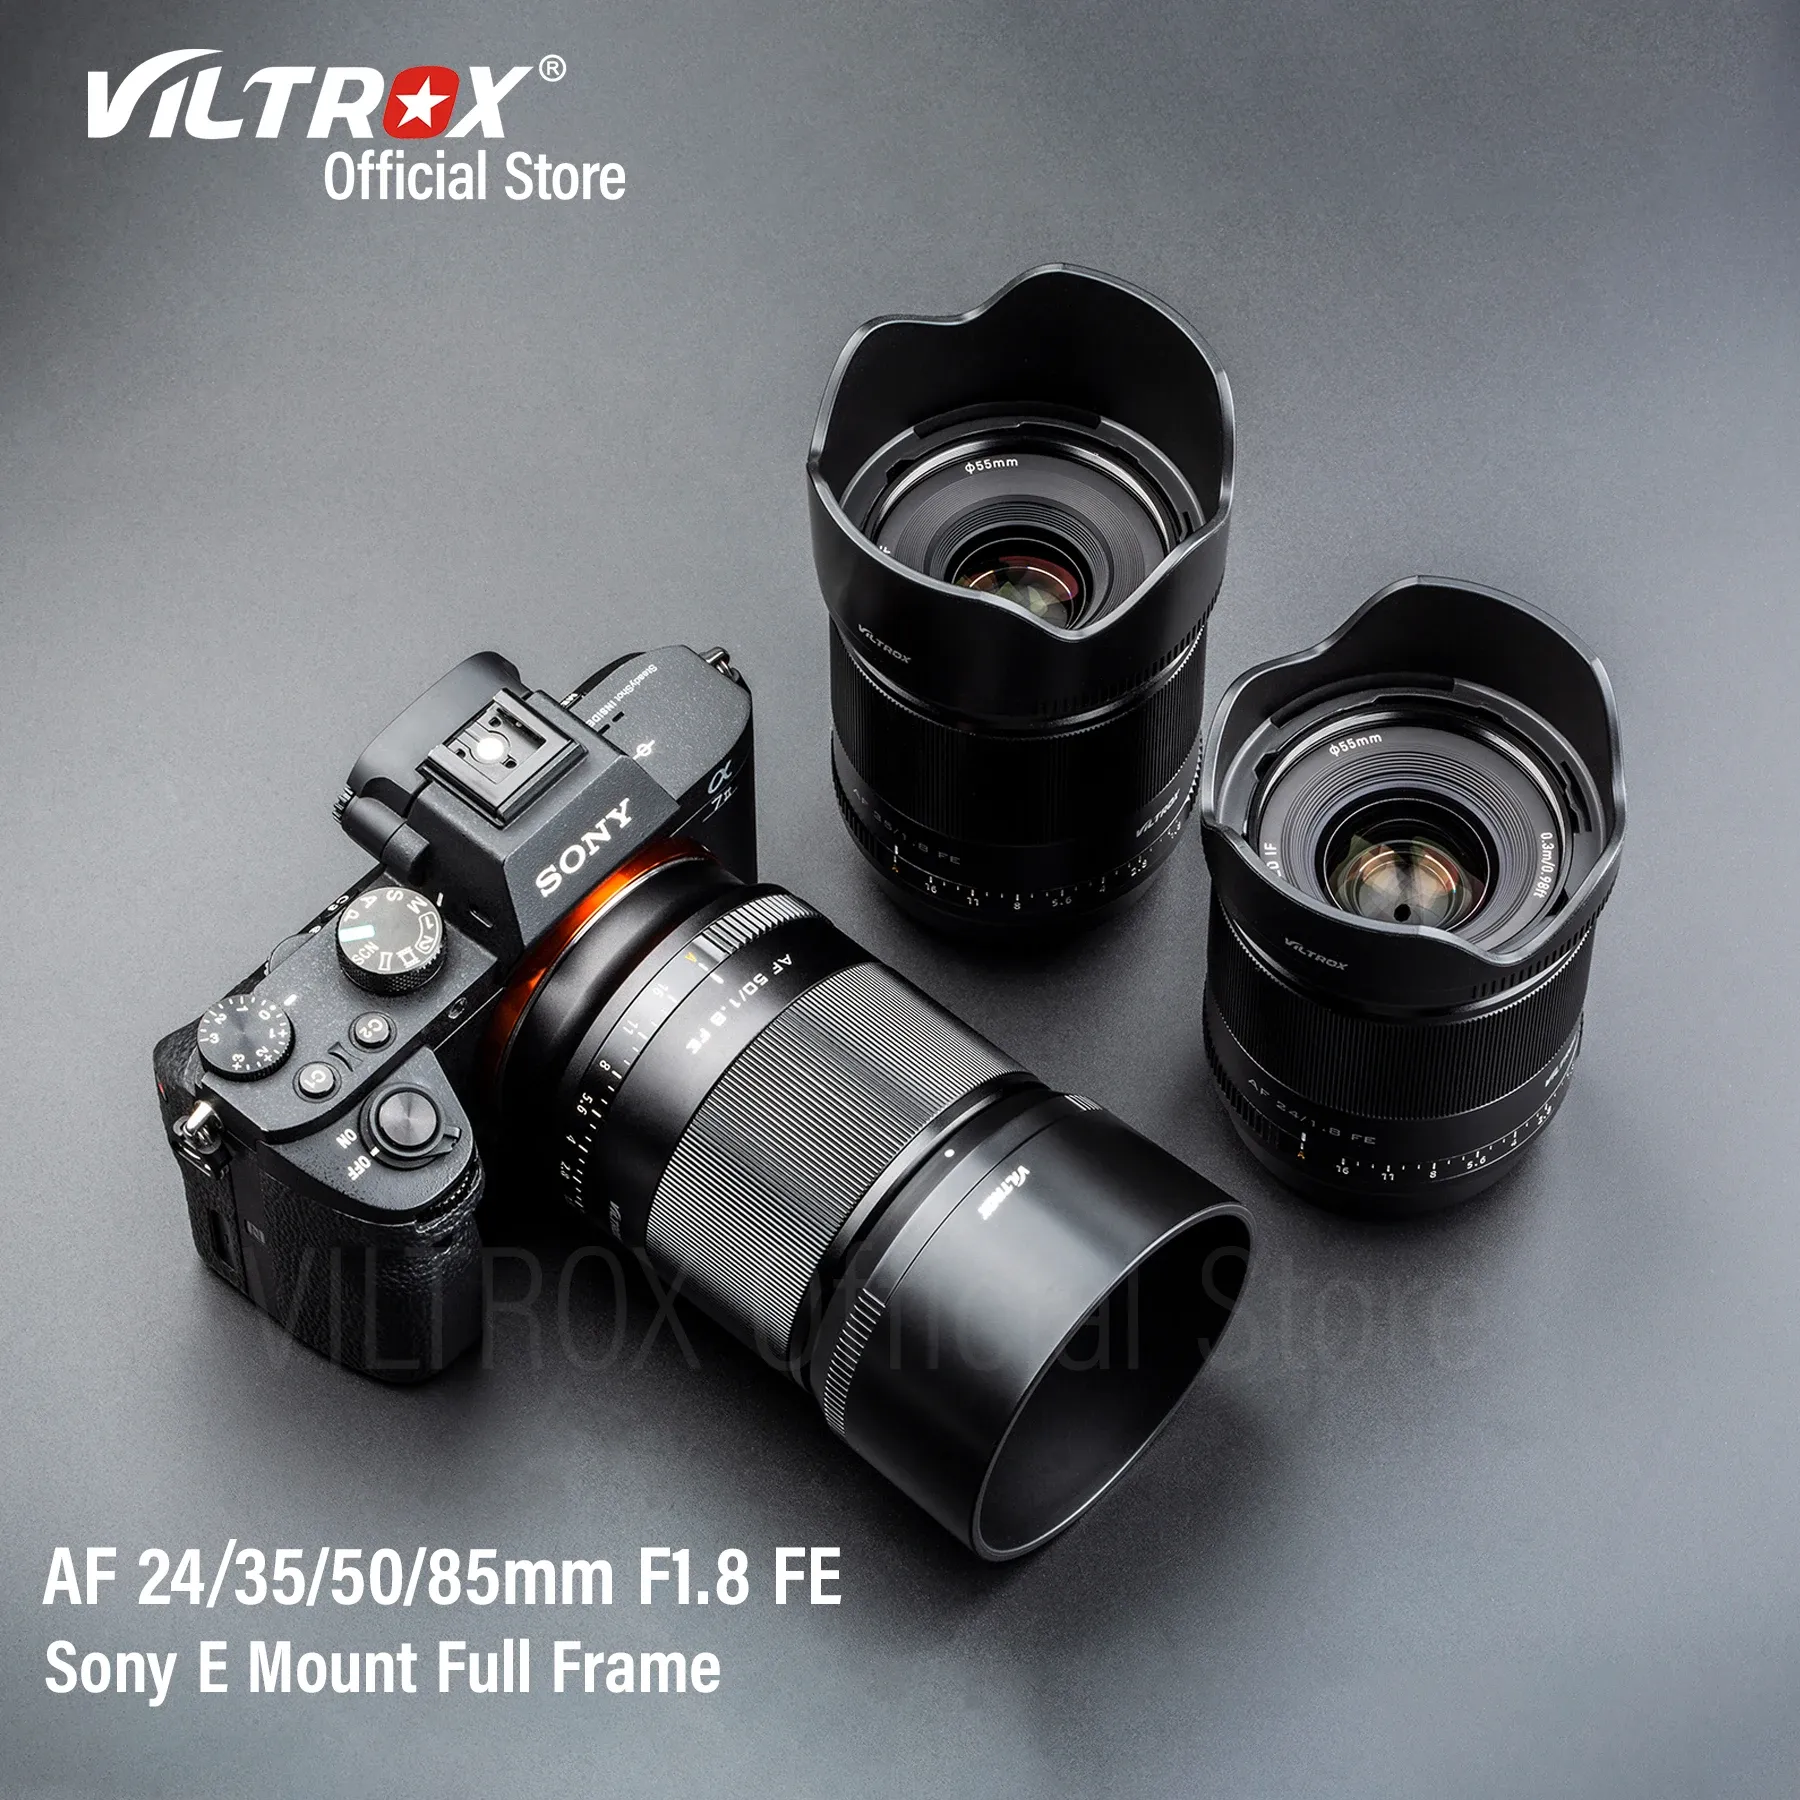 Acessórios Viltrox 24mm 35mm 50mm 85mm F1.8 Lente da câmera Foco Auto Foco Full Prime Prime Grande Retrato Fe para Sony E Mount A7